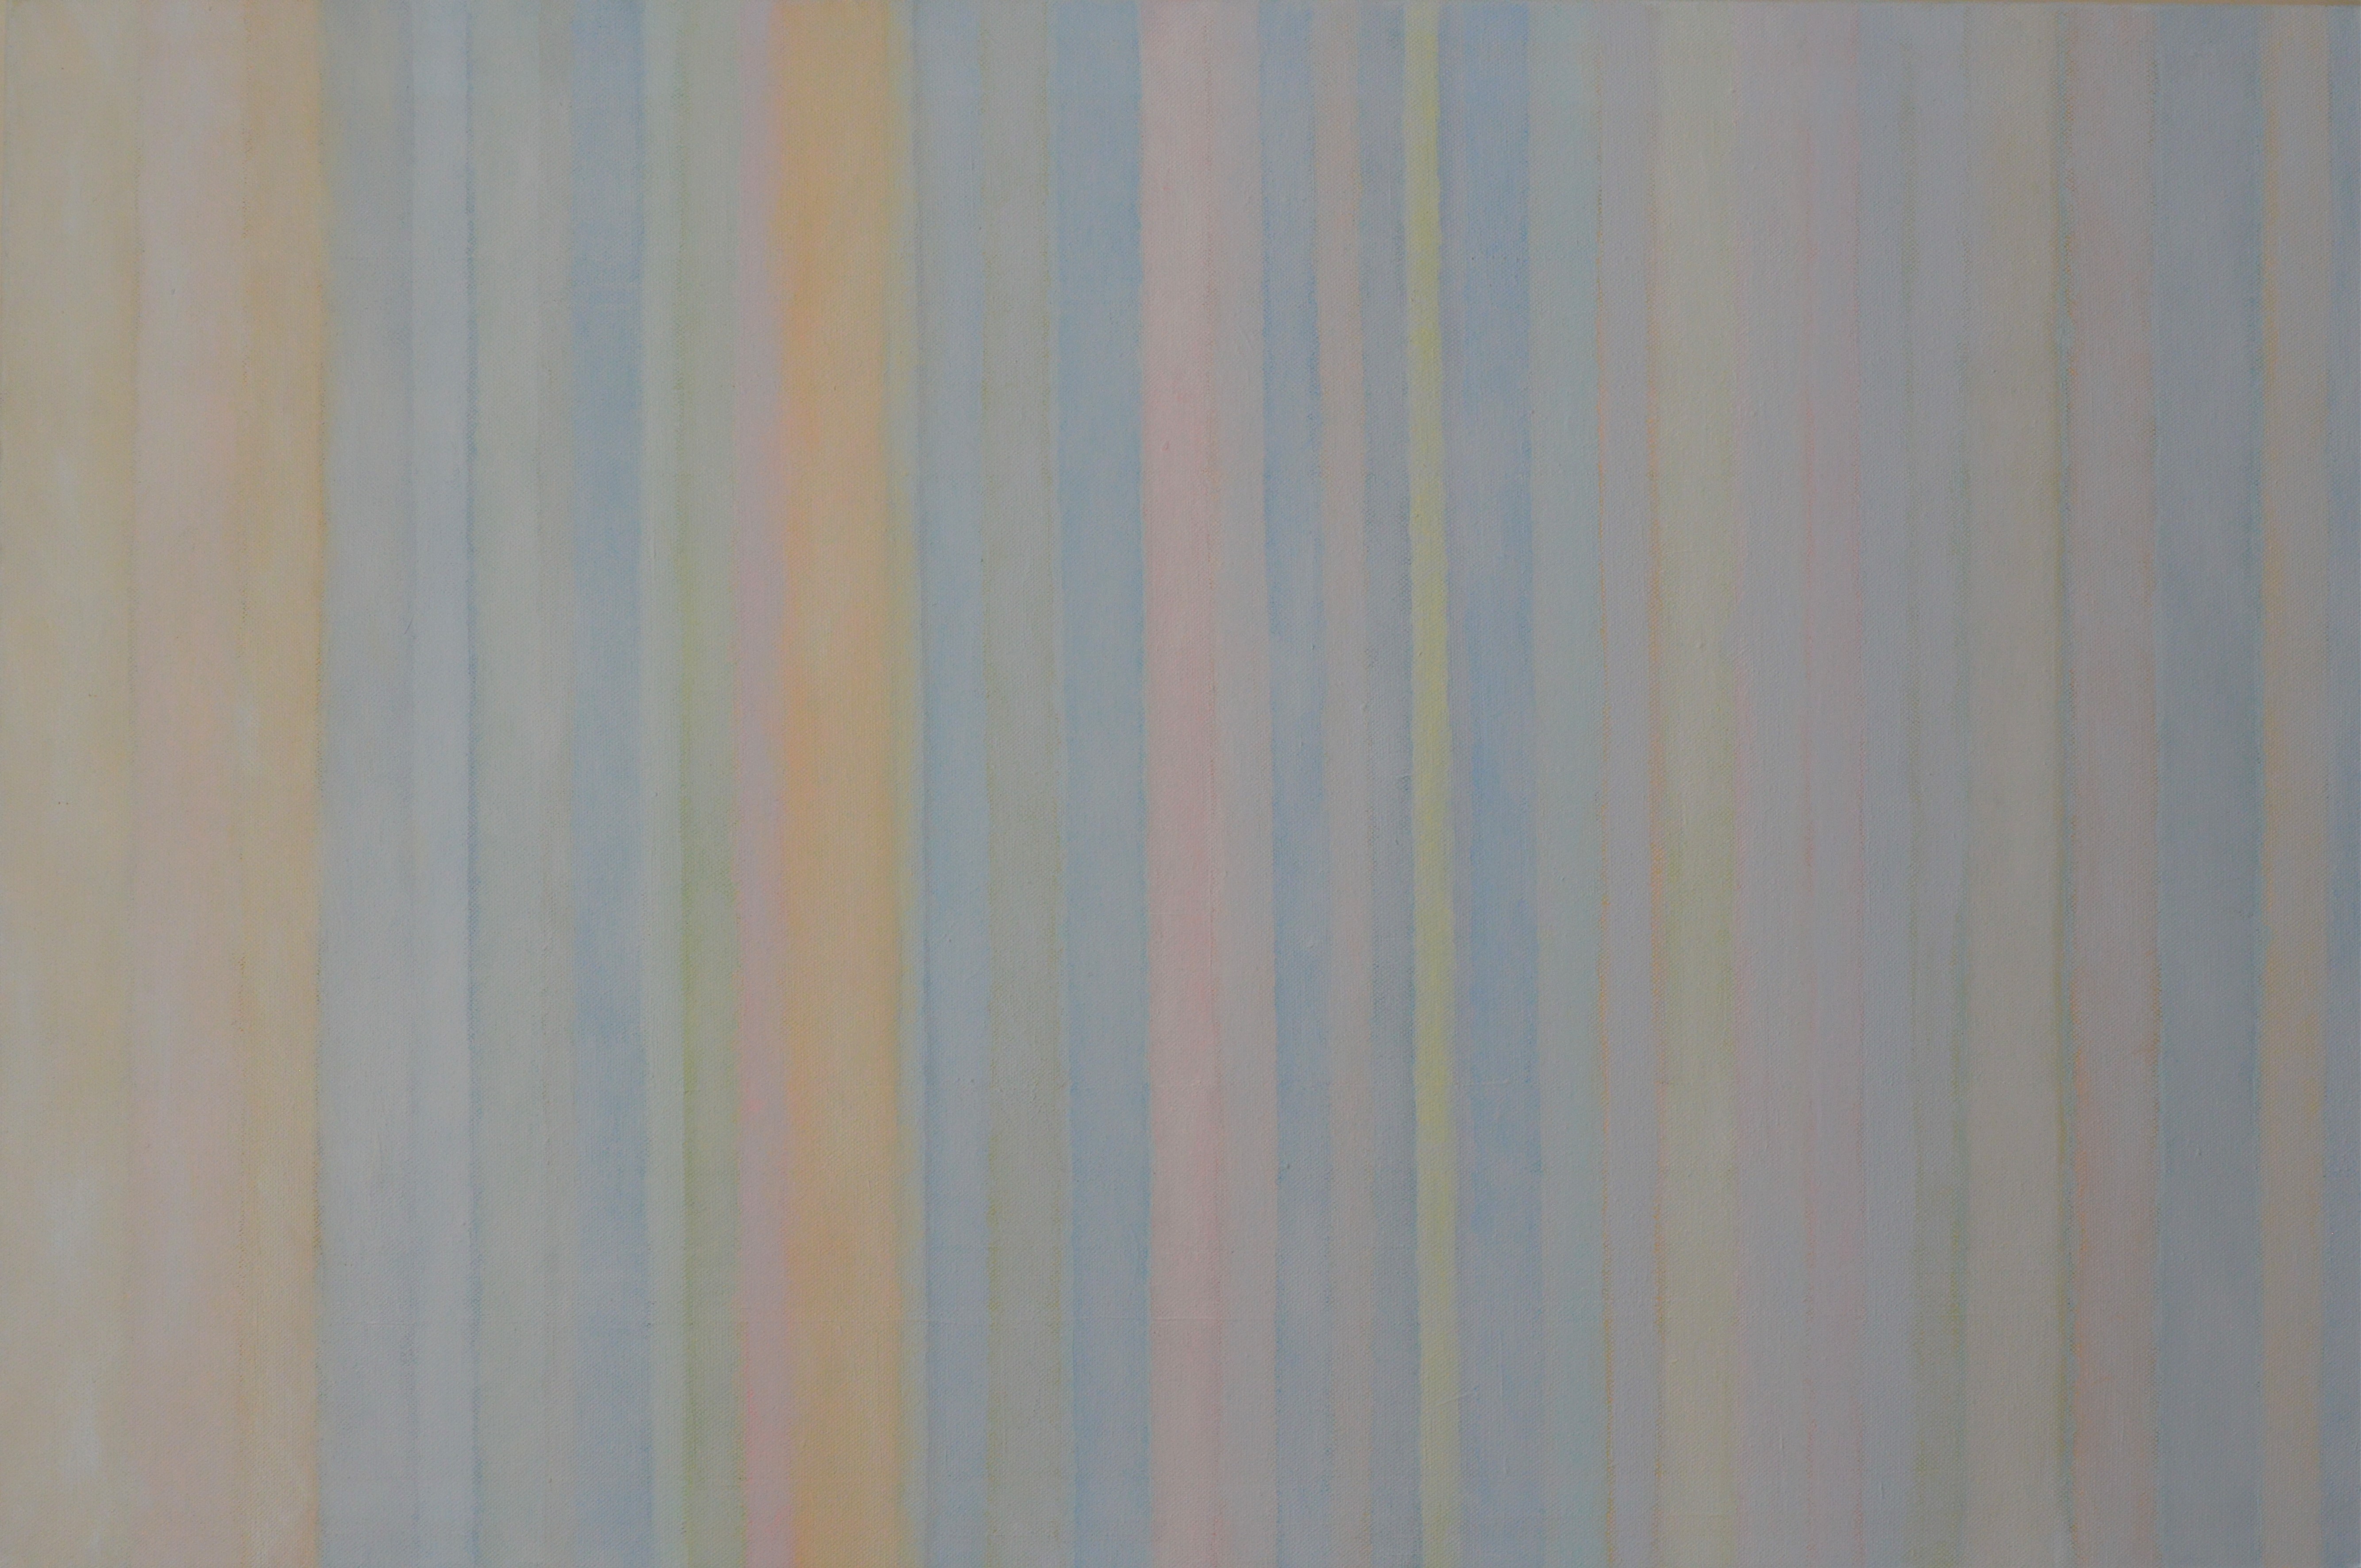 'Patterning # 4' 2020. Oil on canvas, 90 cm x 60 cm.